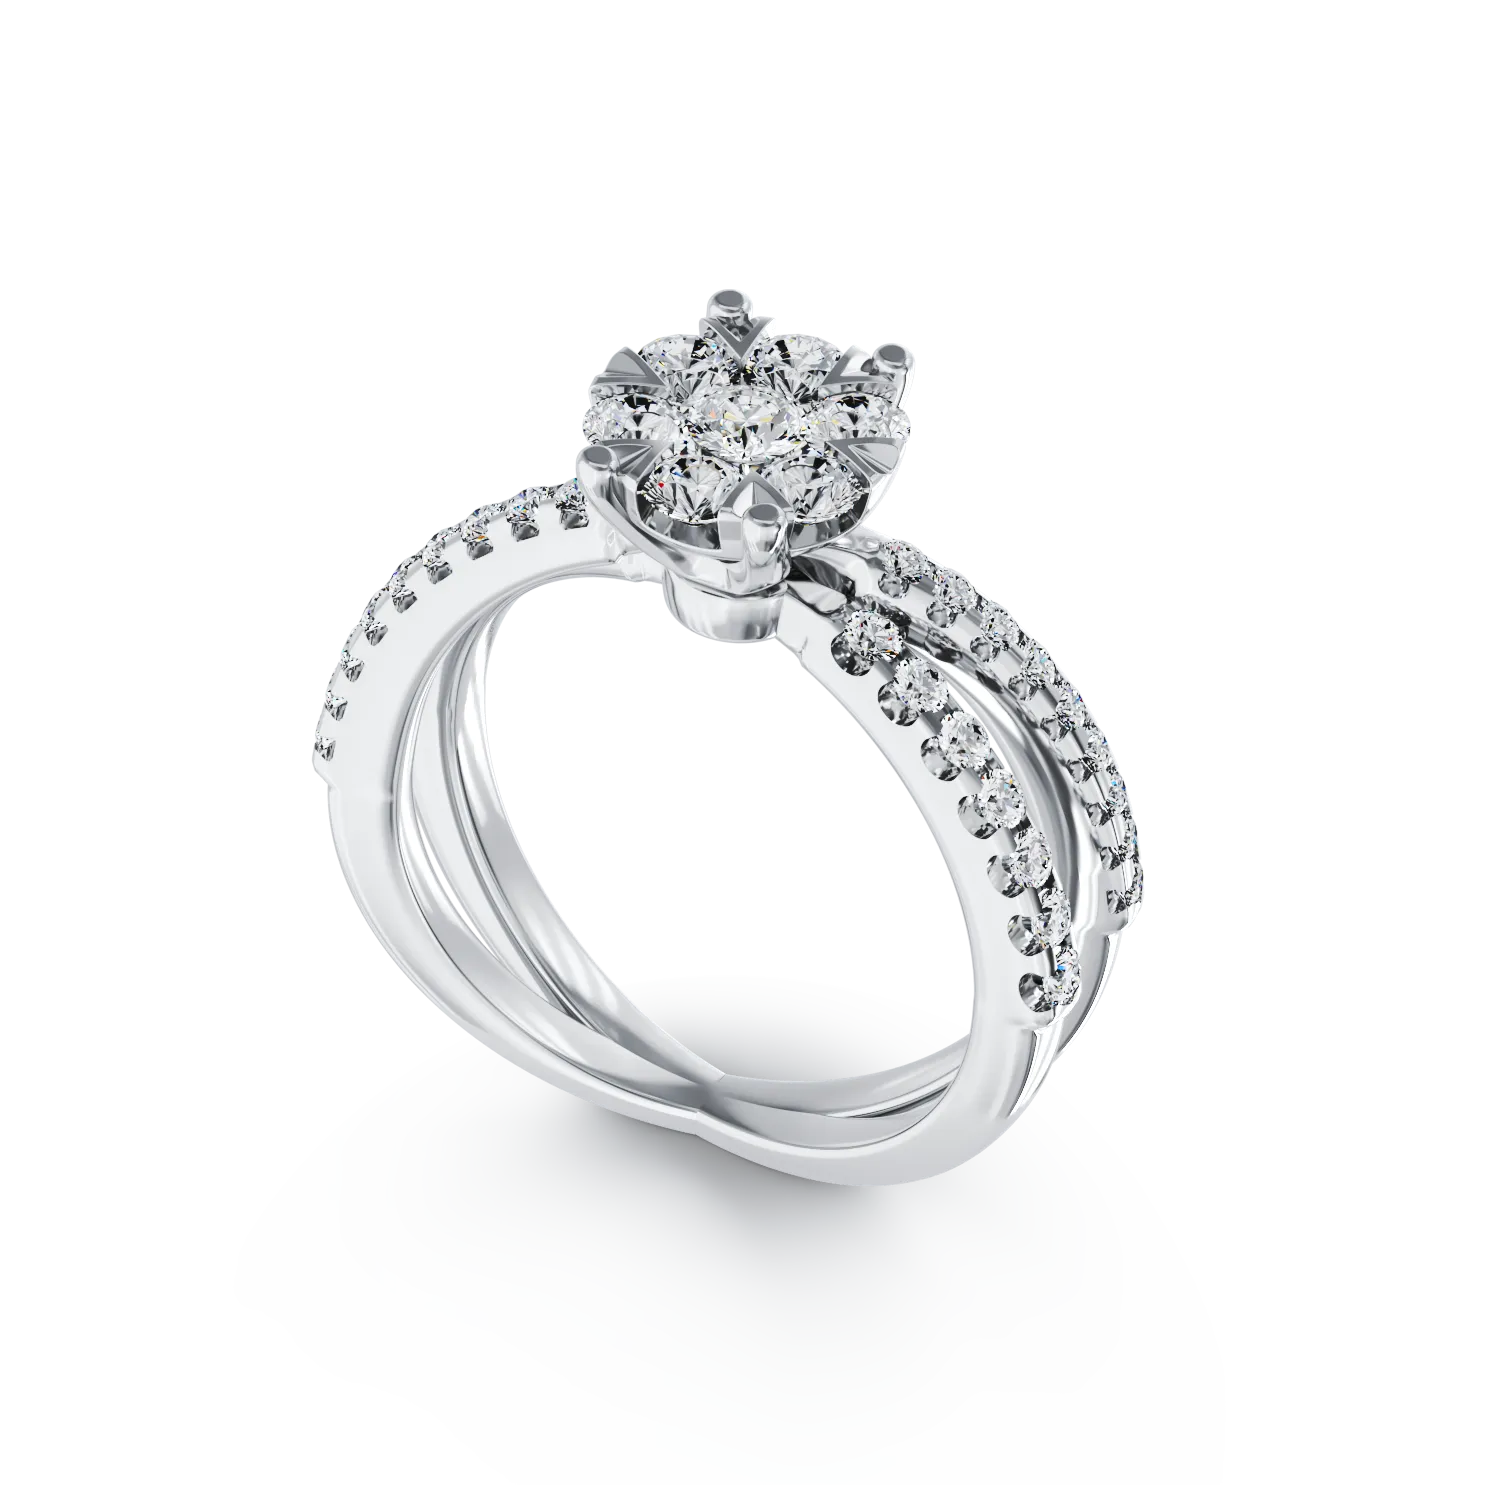 Inel de logodna din aur alb de 18K cu diamante de 0.6ct